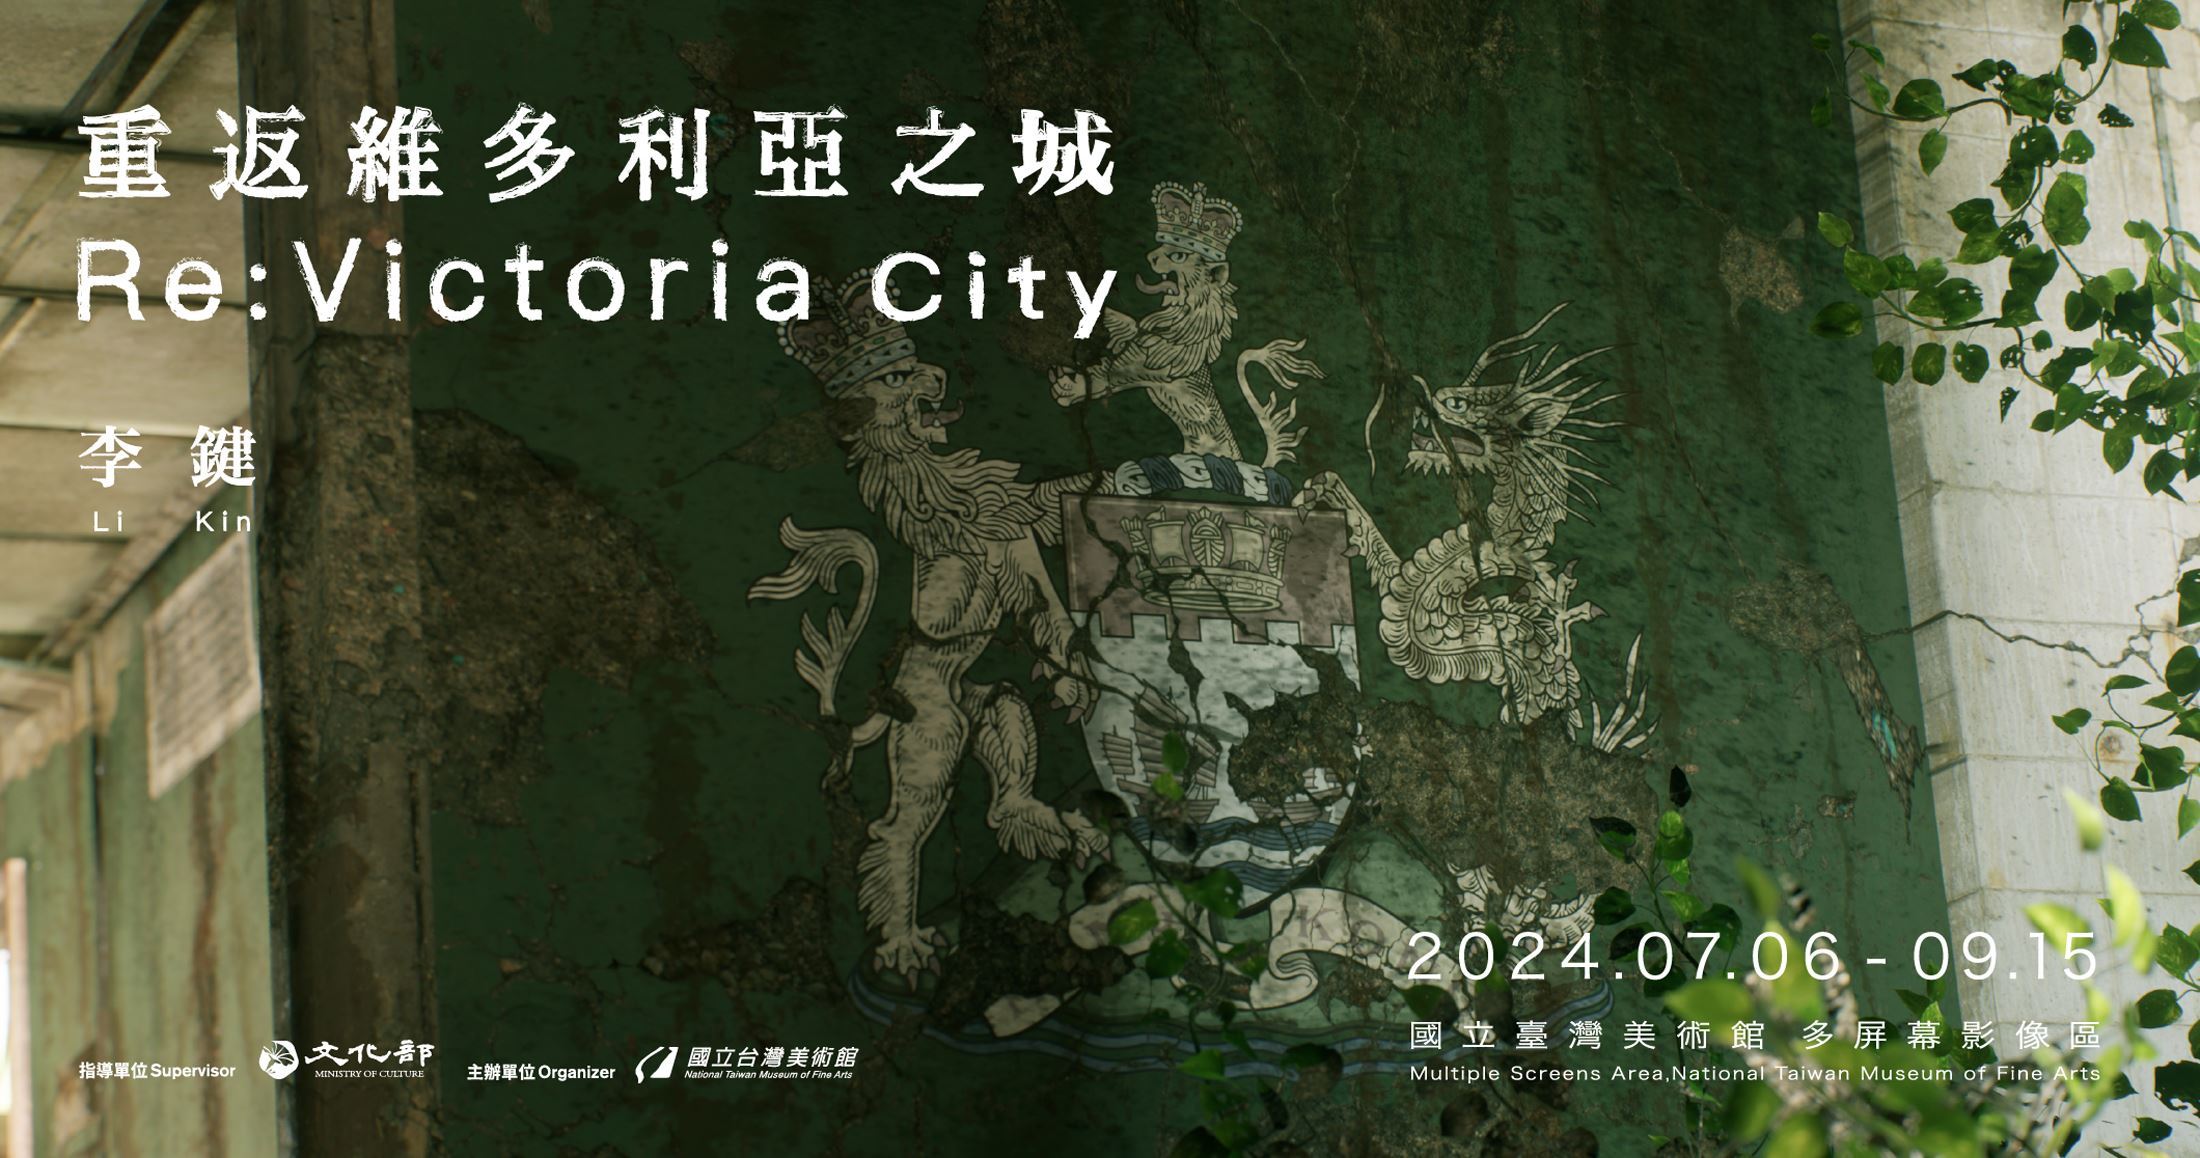 NTMoFA launches digital art exhibition ‘Re: Victoria City’ 